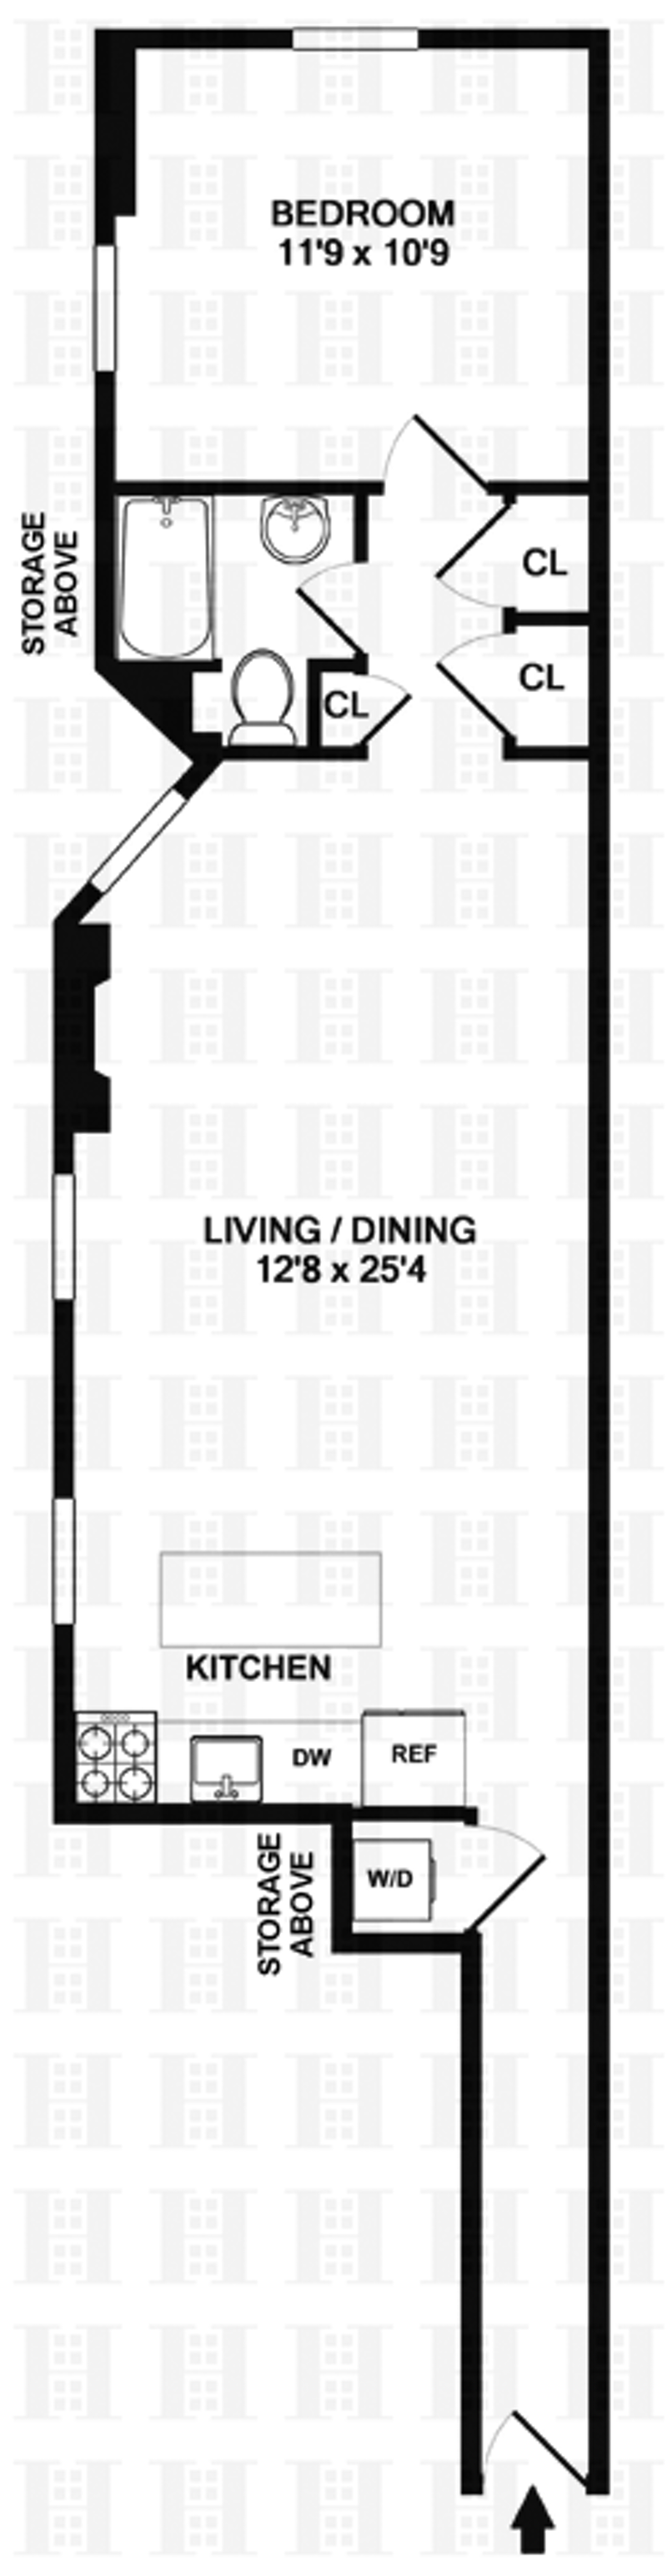 Floorplan for 153 West 80th Street, 3B